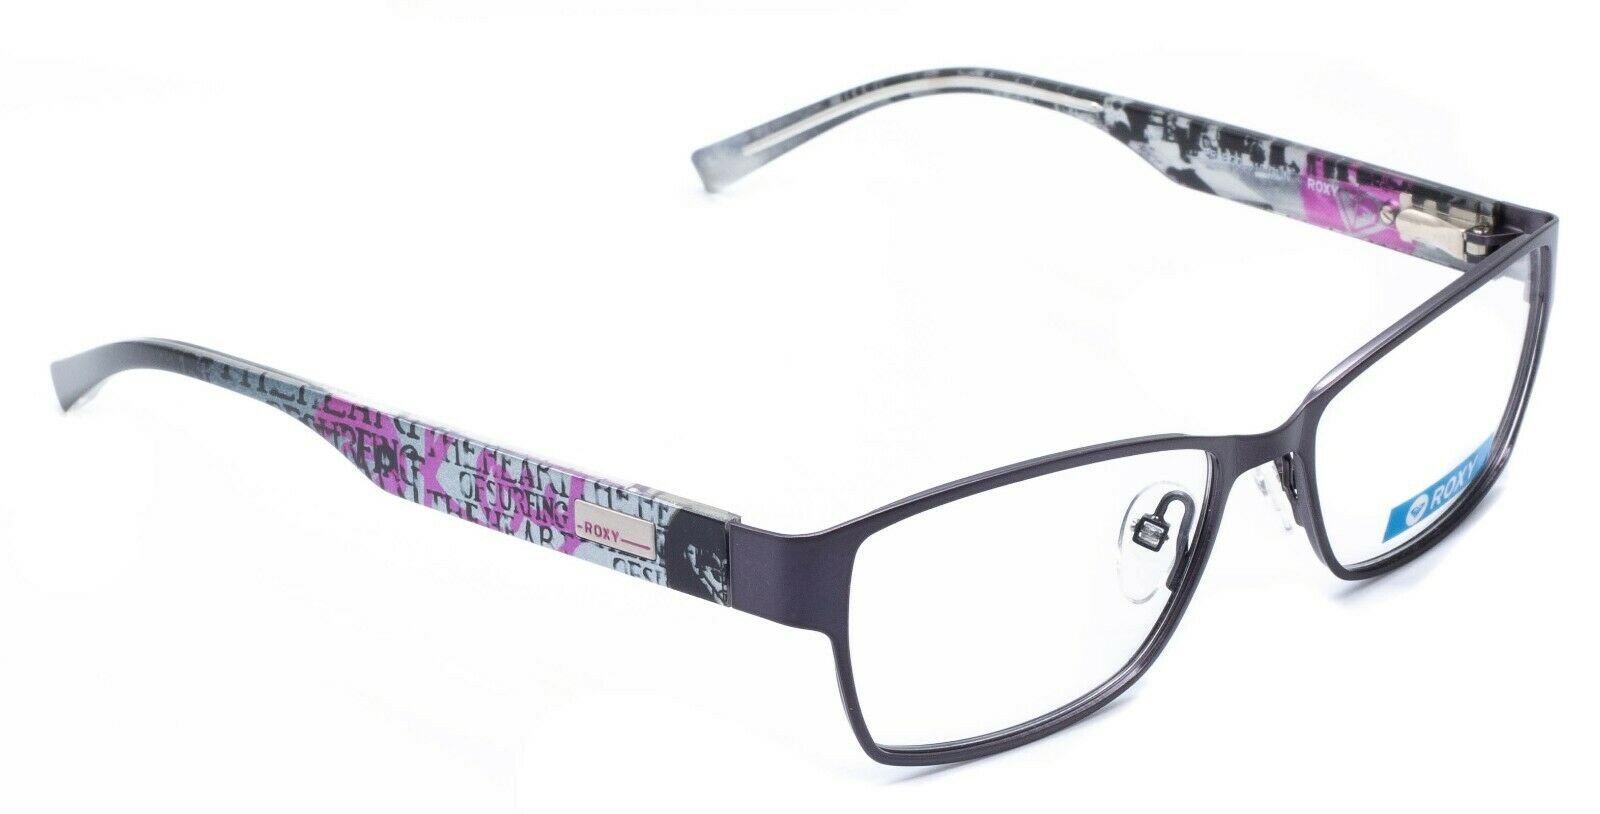 ROXY ERJEG00010/GUN 51mm Eyewear FRAMES Glasses RX Optical Eyeglasses - New